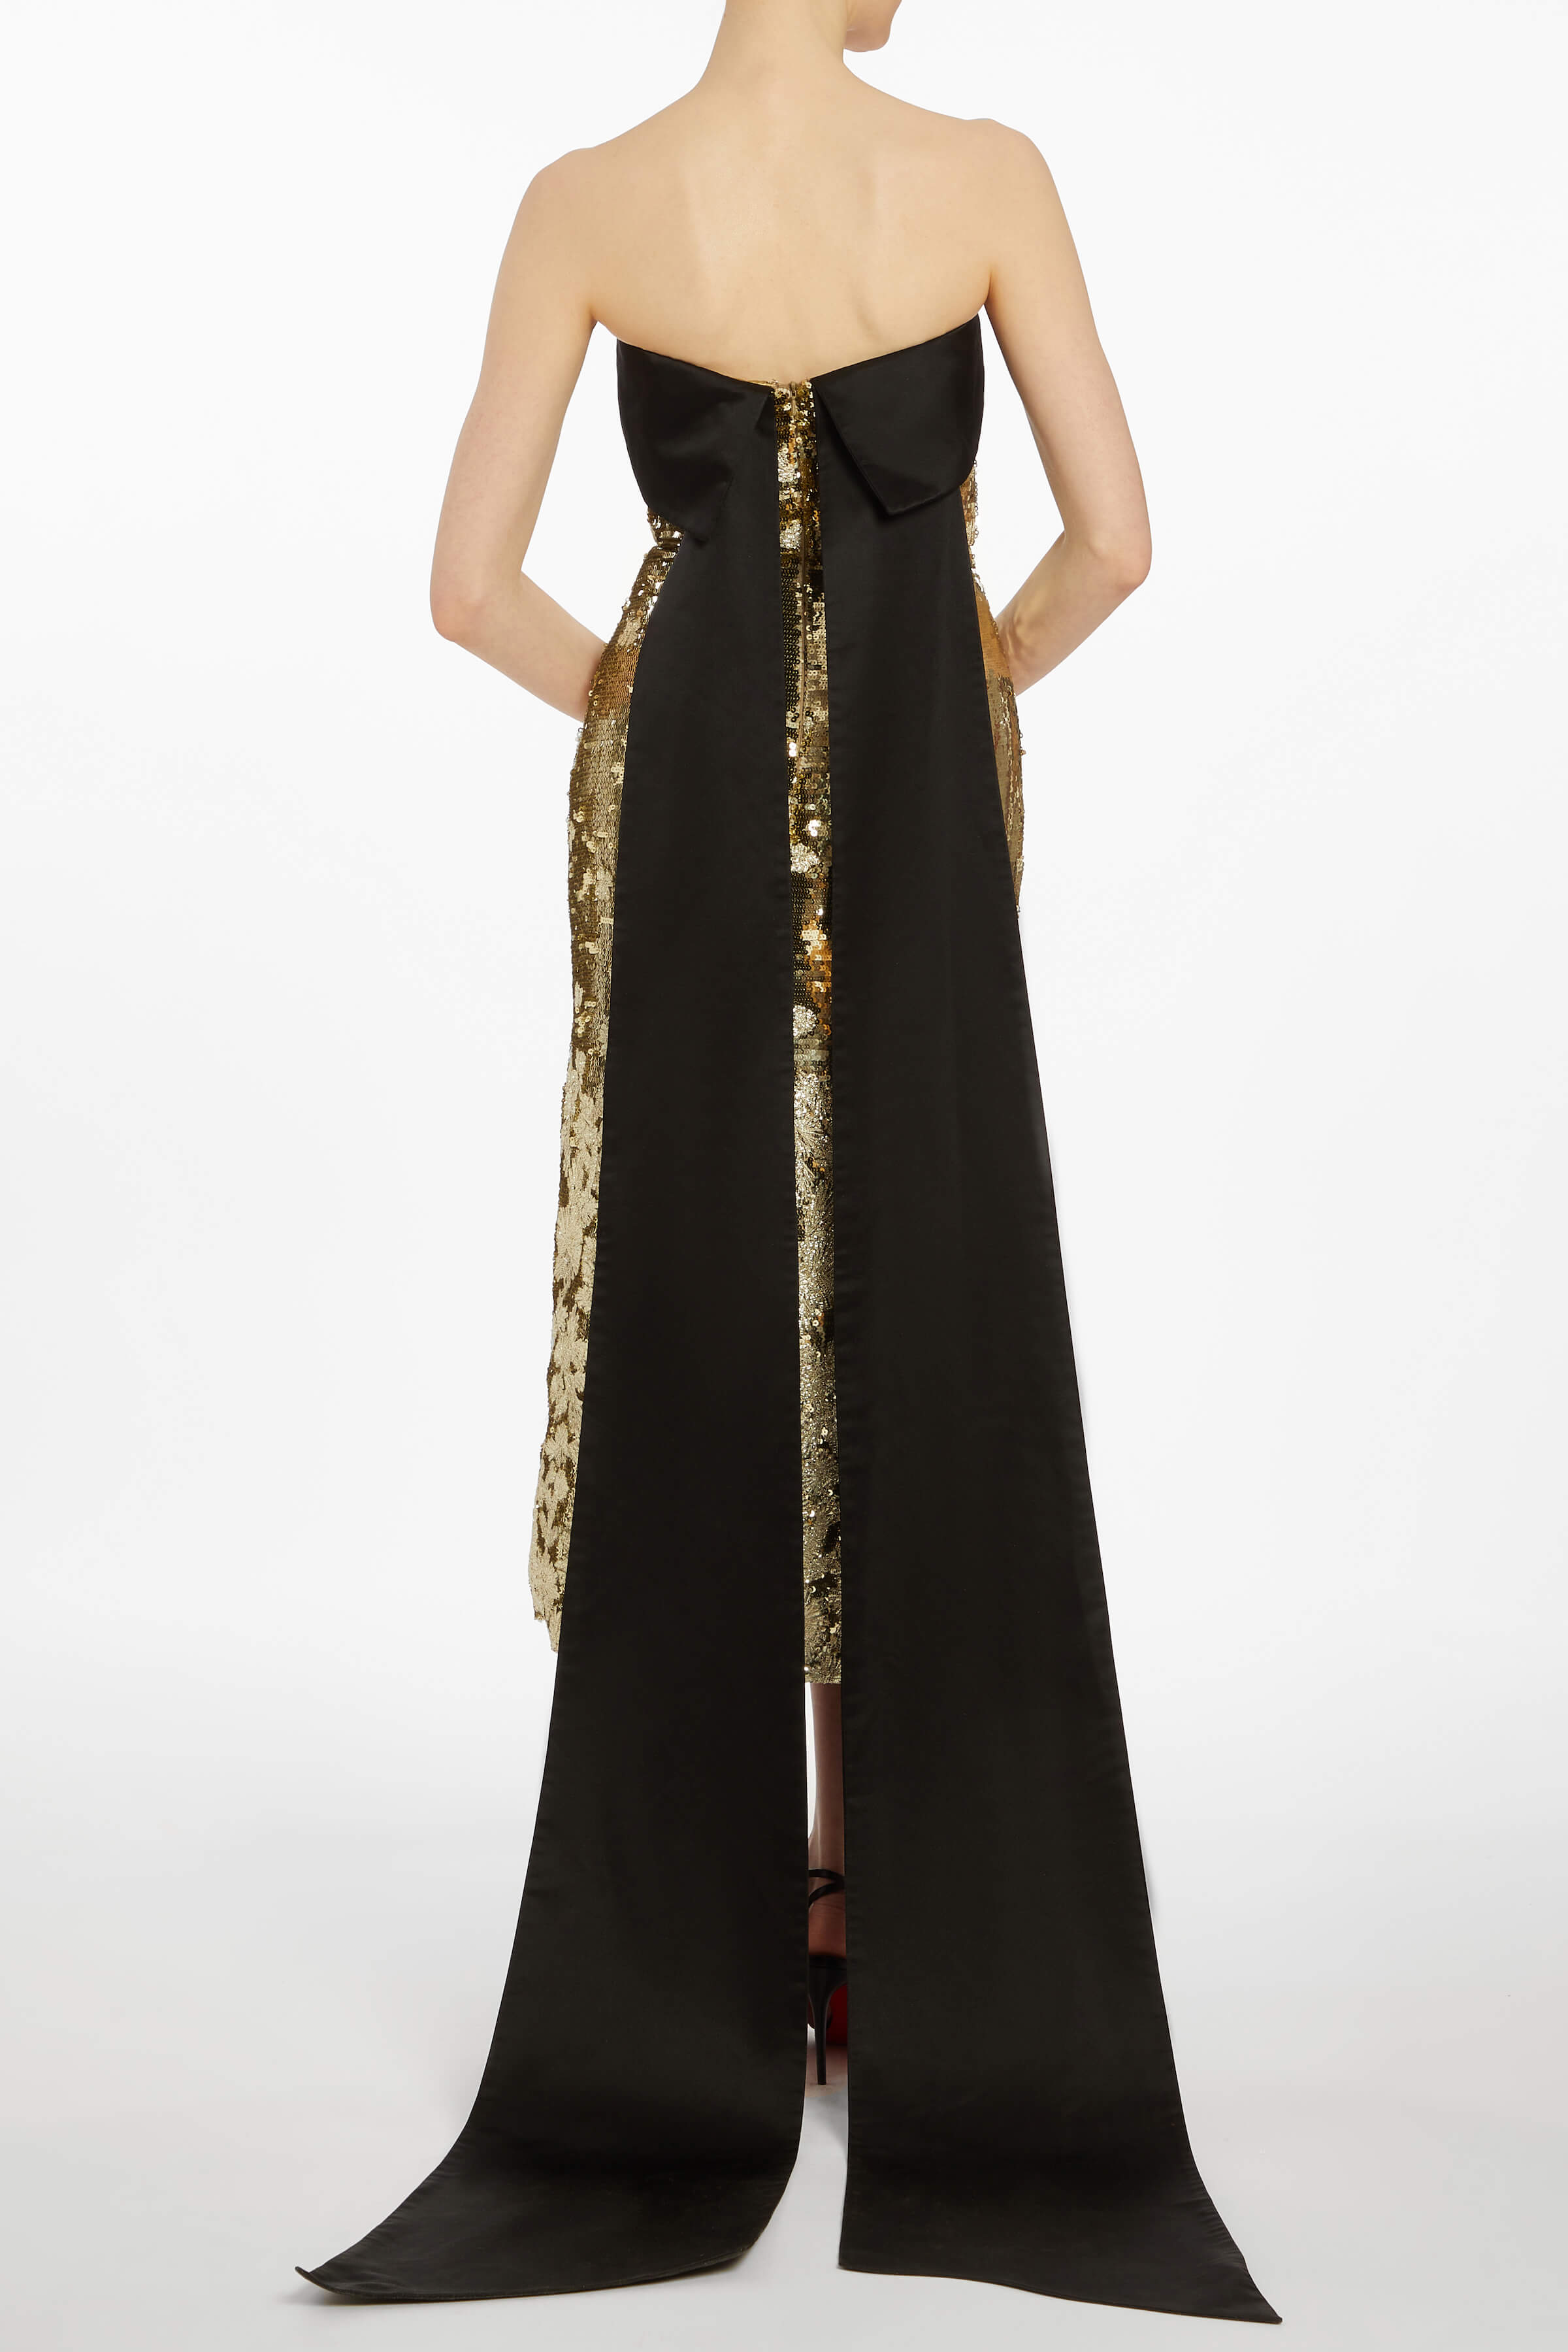 Isabetta Gold Floral Sequin Dress